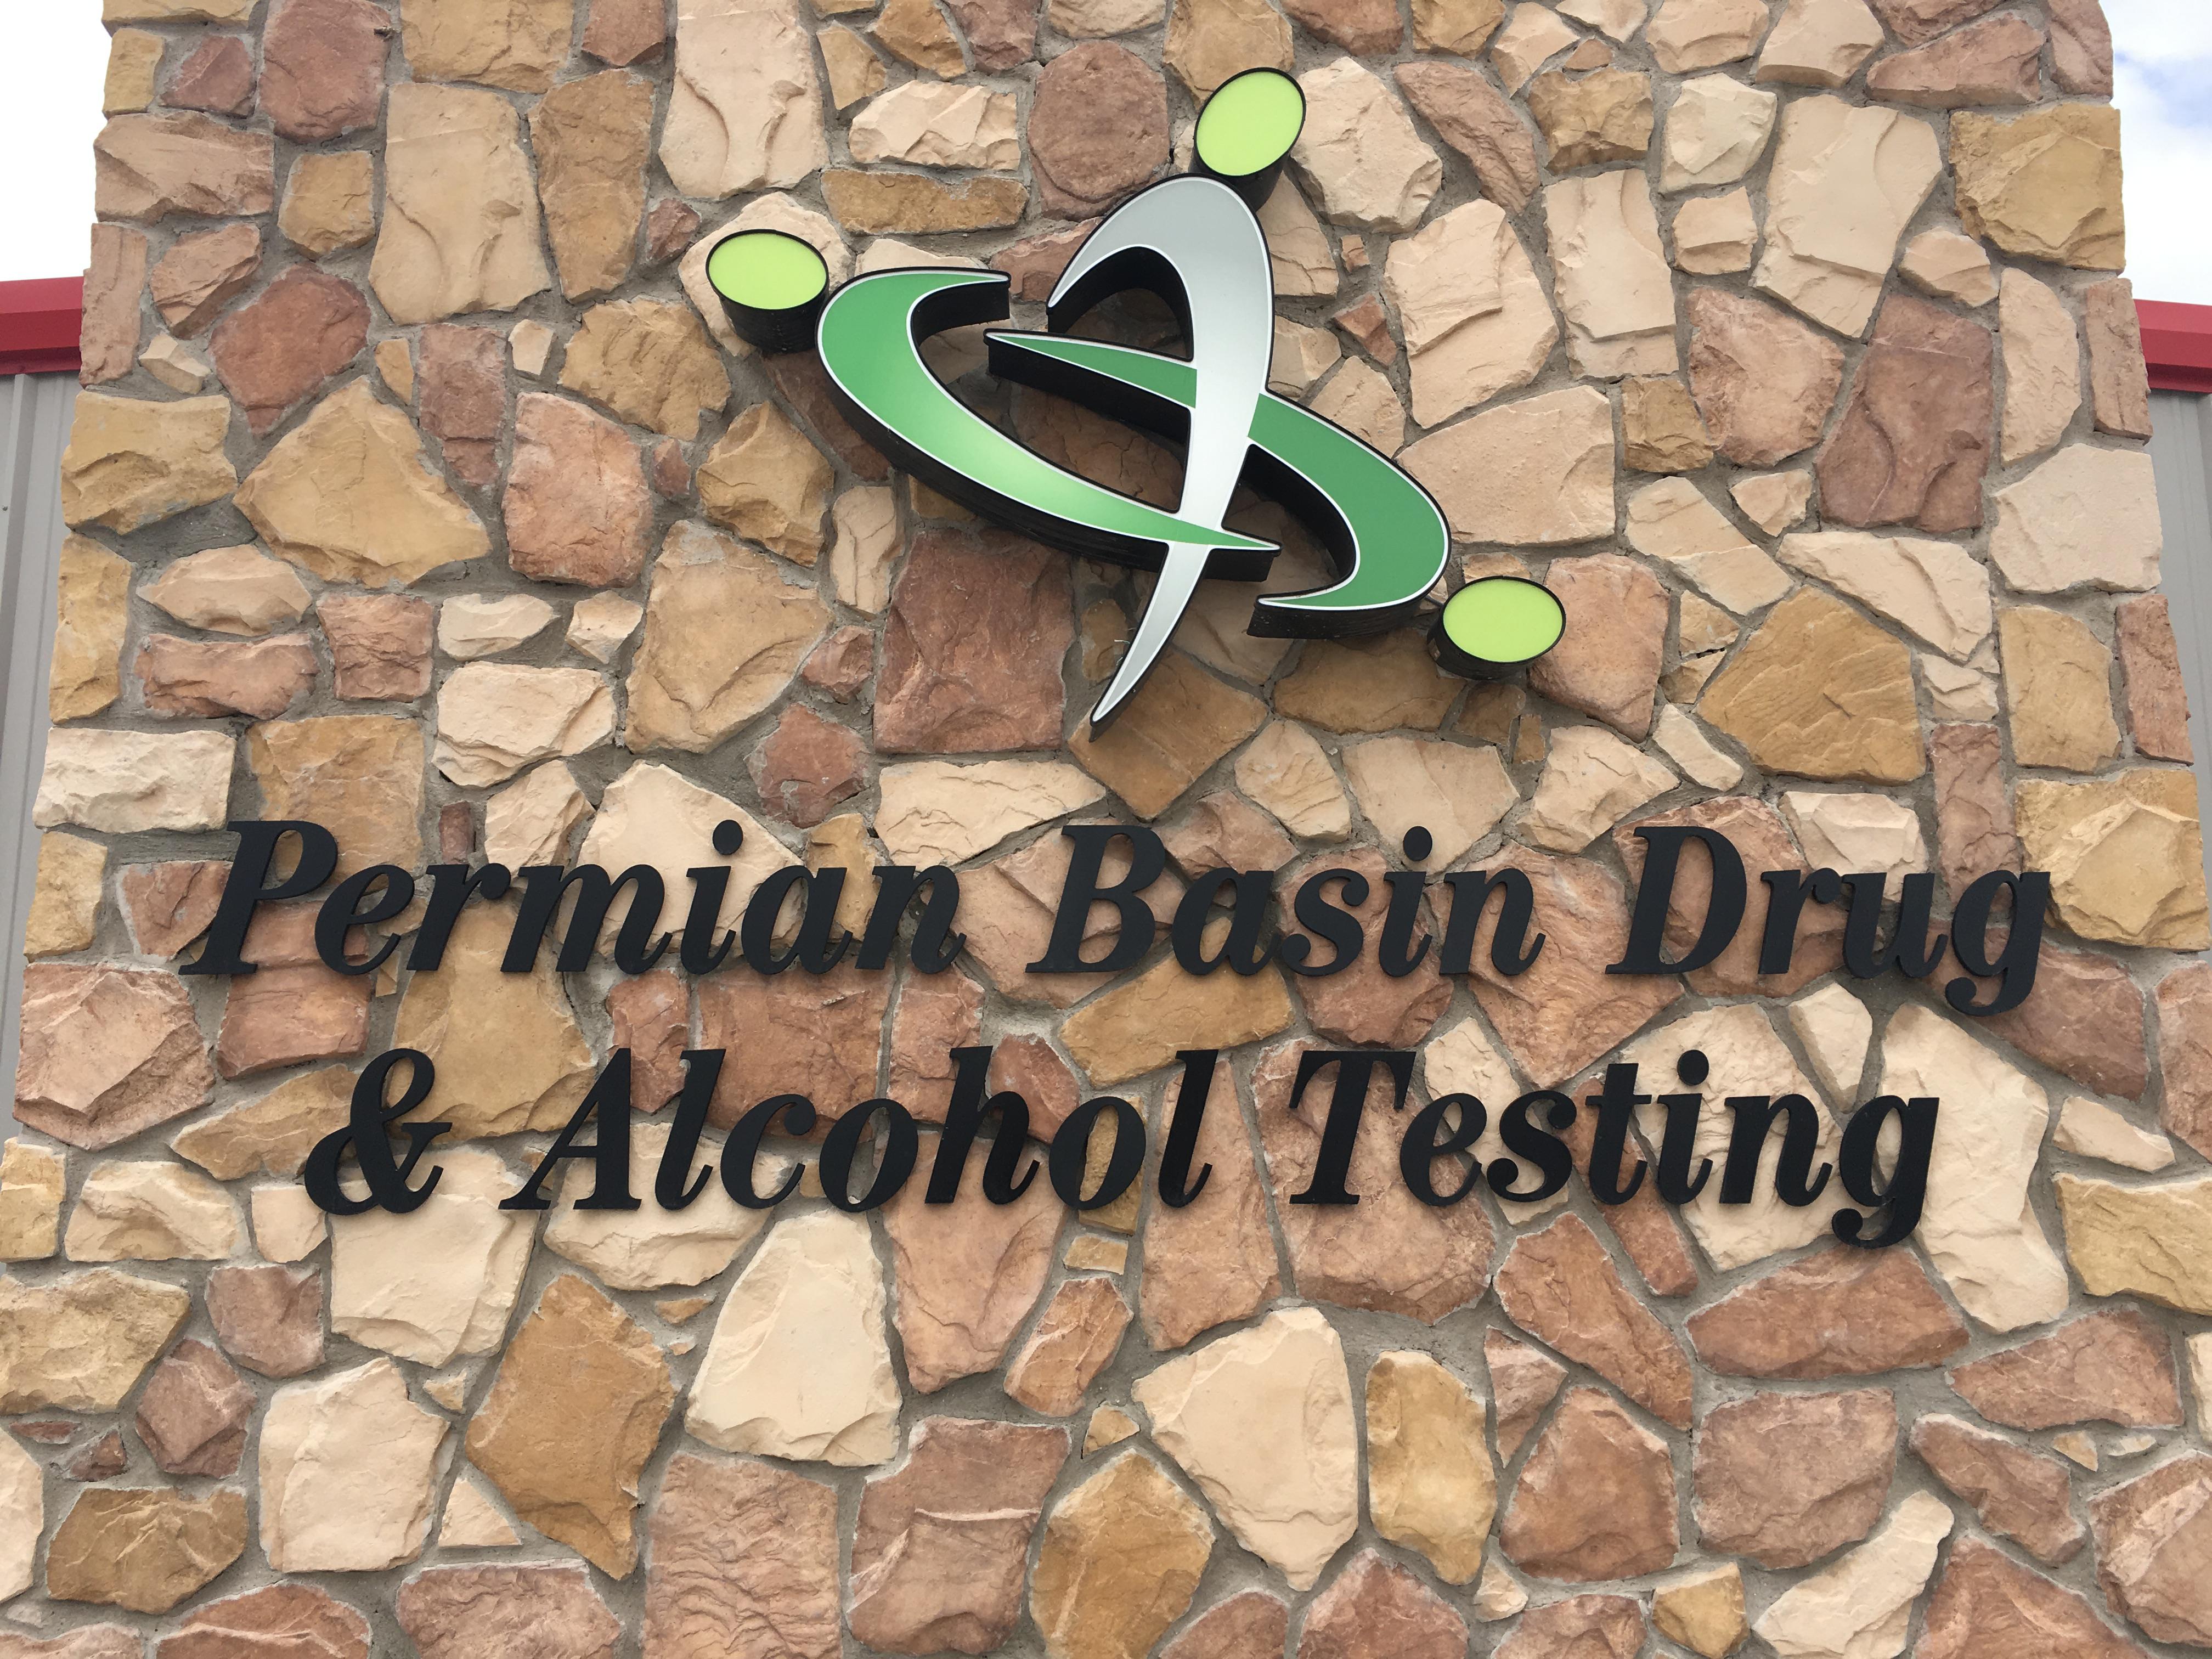 Permian Basin Drug & Alcohol Testing Logo